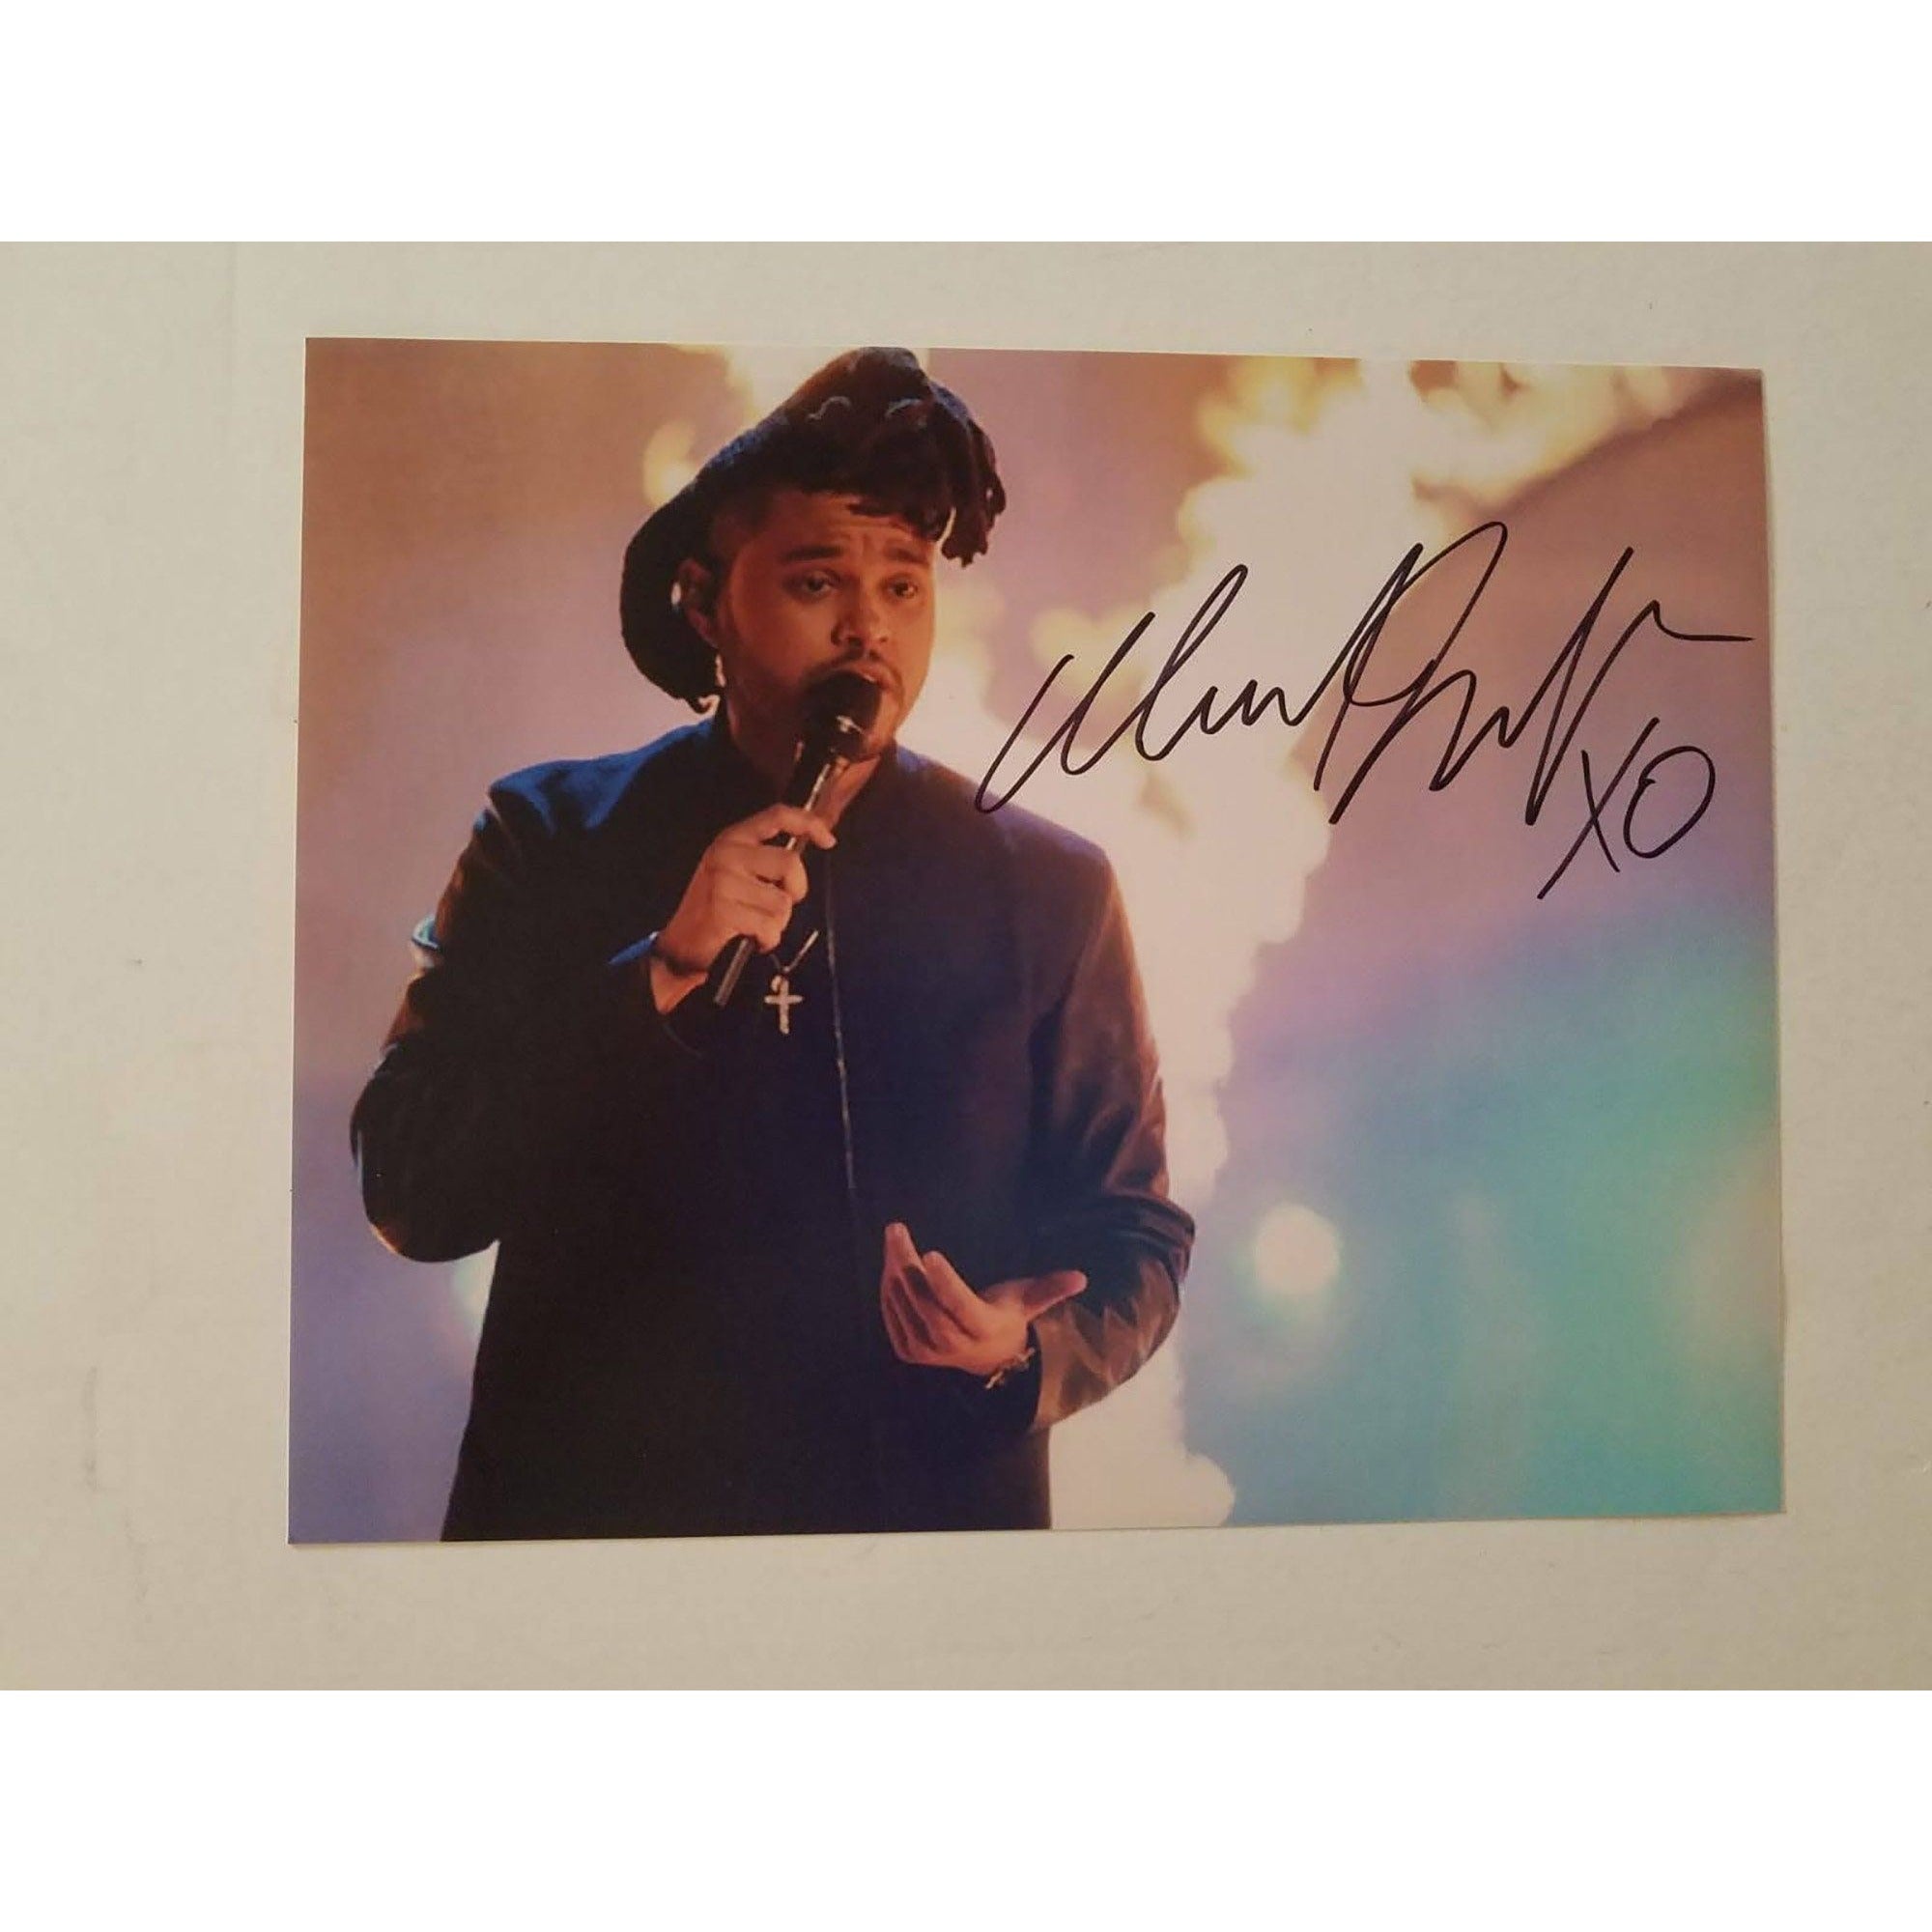 The Weeknd, Abel Makkonen Tesfaye 8 x 10 sign photo